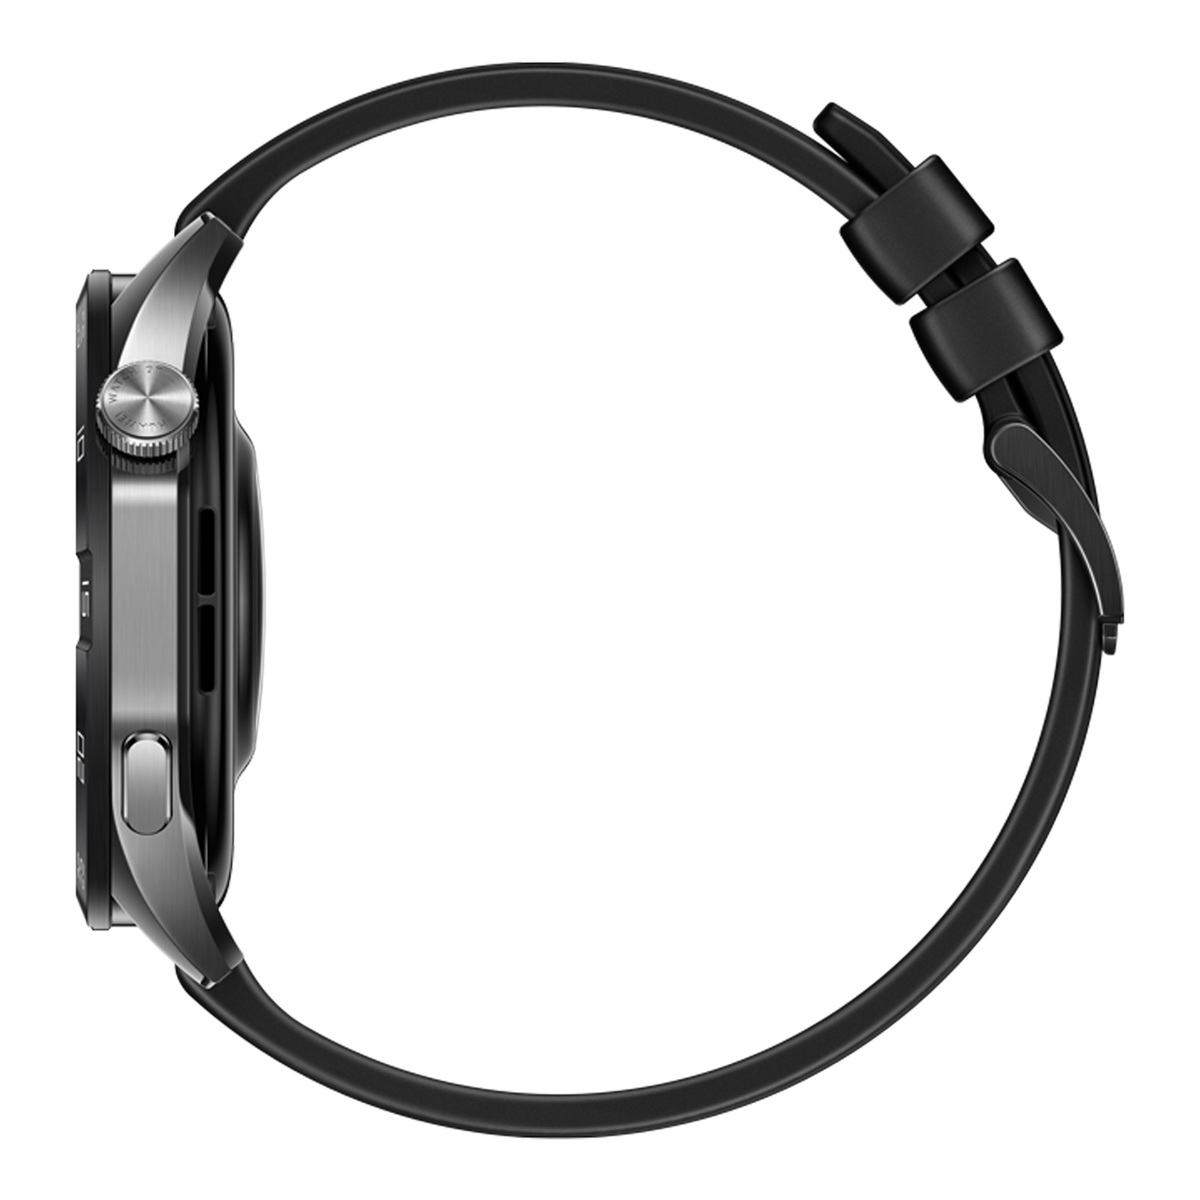 Huawei Smart Watch GT 4, 46 mm, Black Fluororubber Strap, Phoinix-B19F